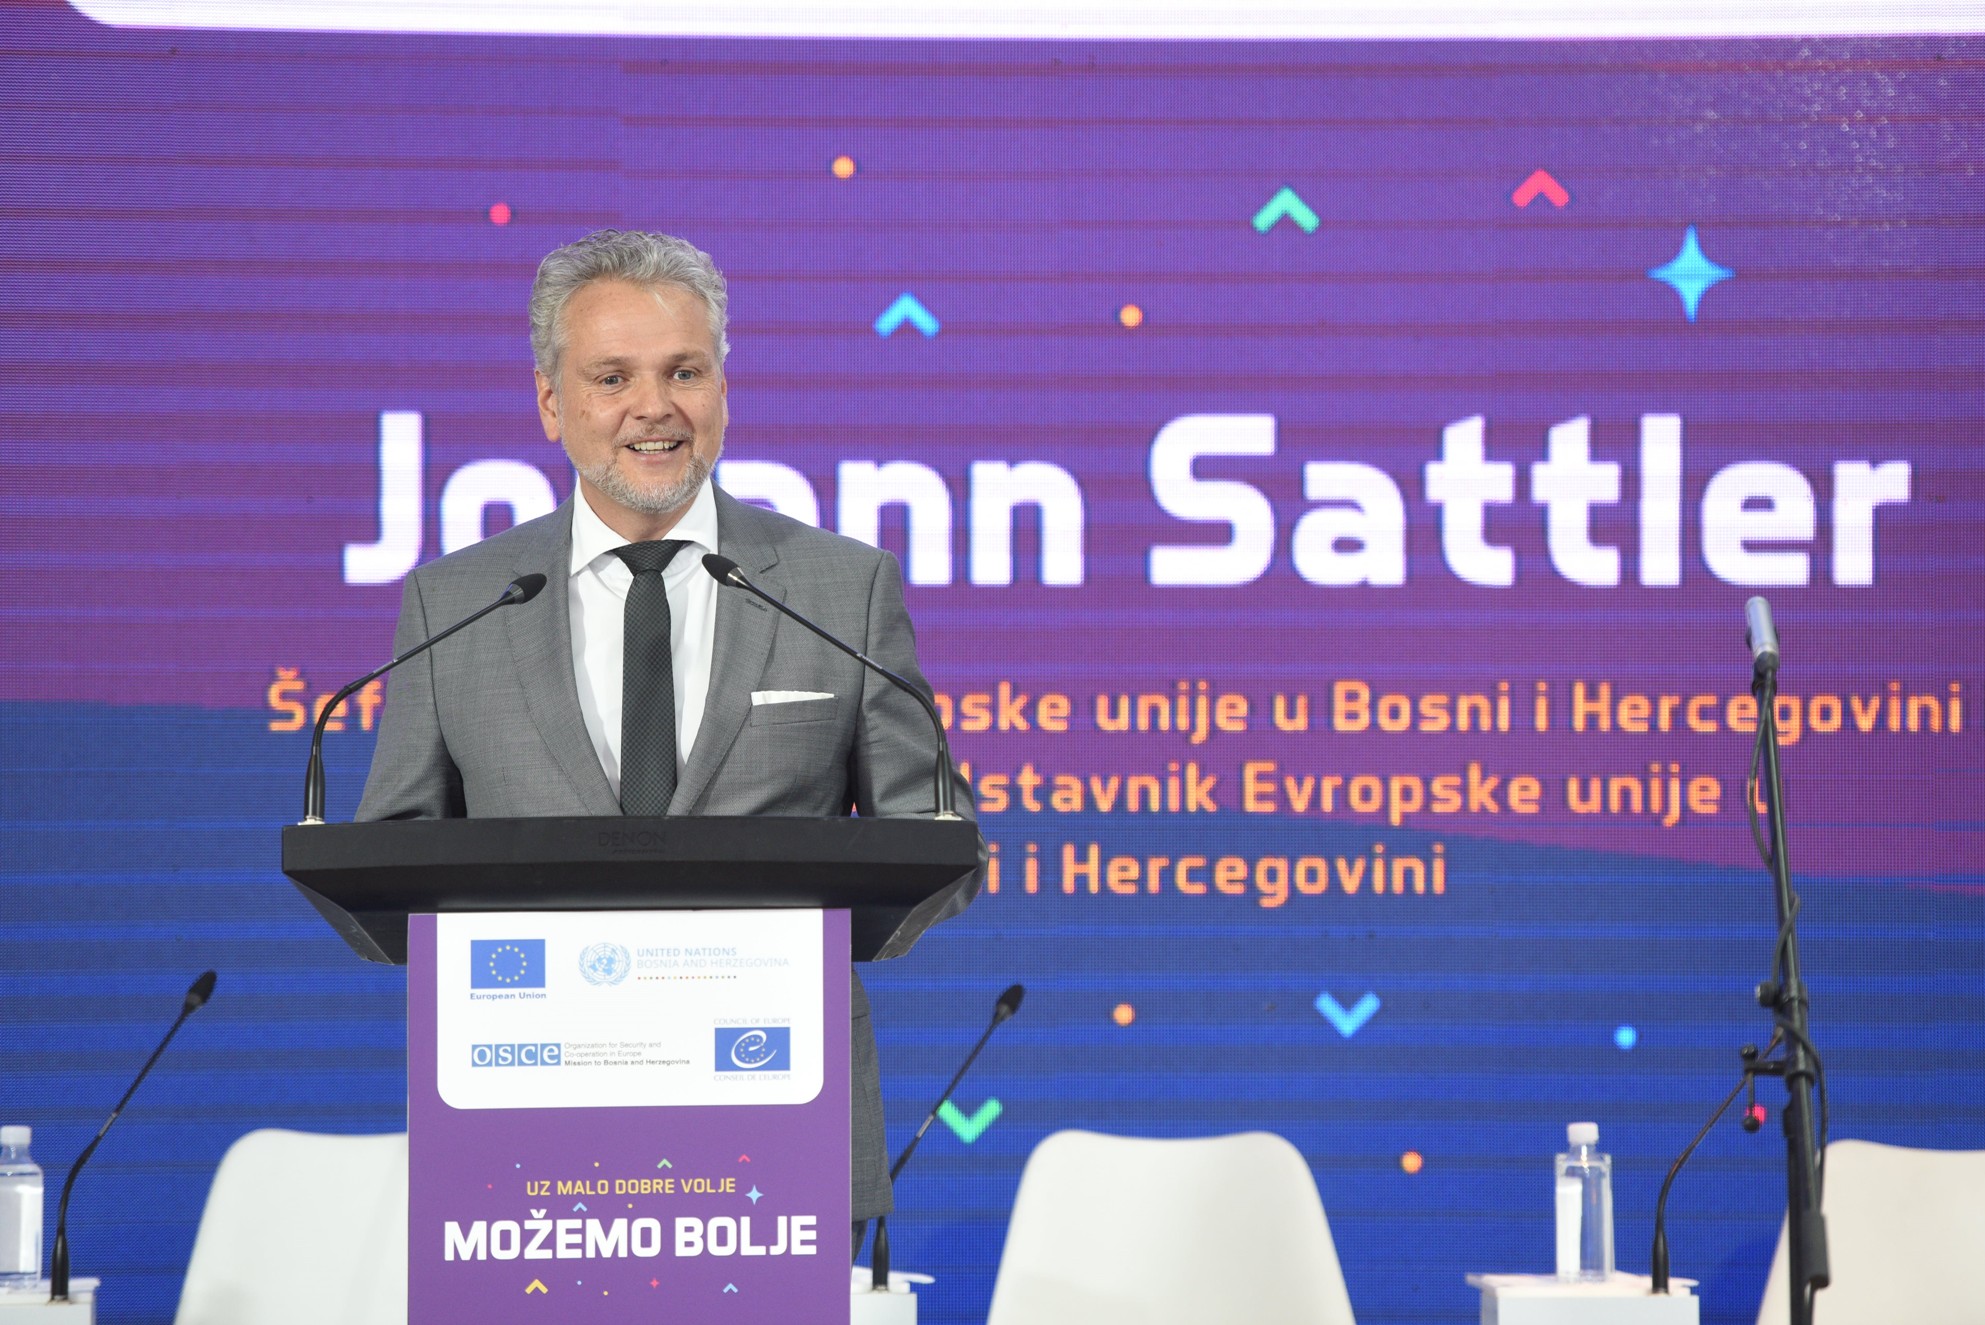 Johann Sattler, Head of the Delegation of the European Union to Bosnia and Herzegovina and the European Union Special Representative in Bosnia and Herzegovina